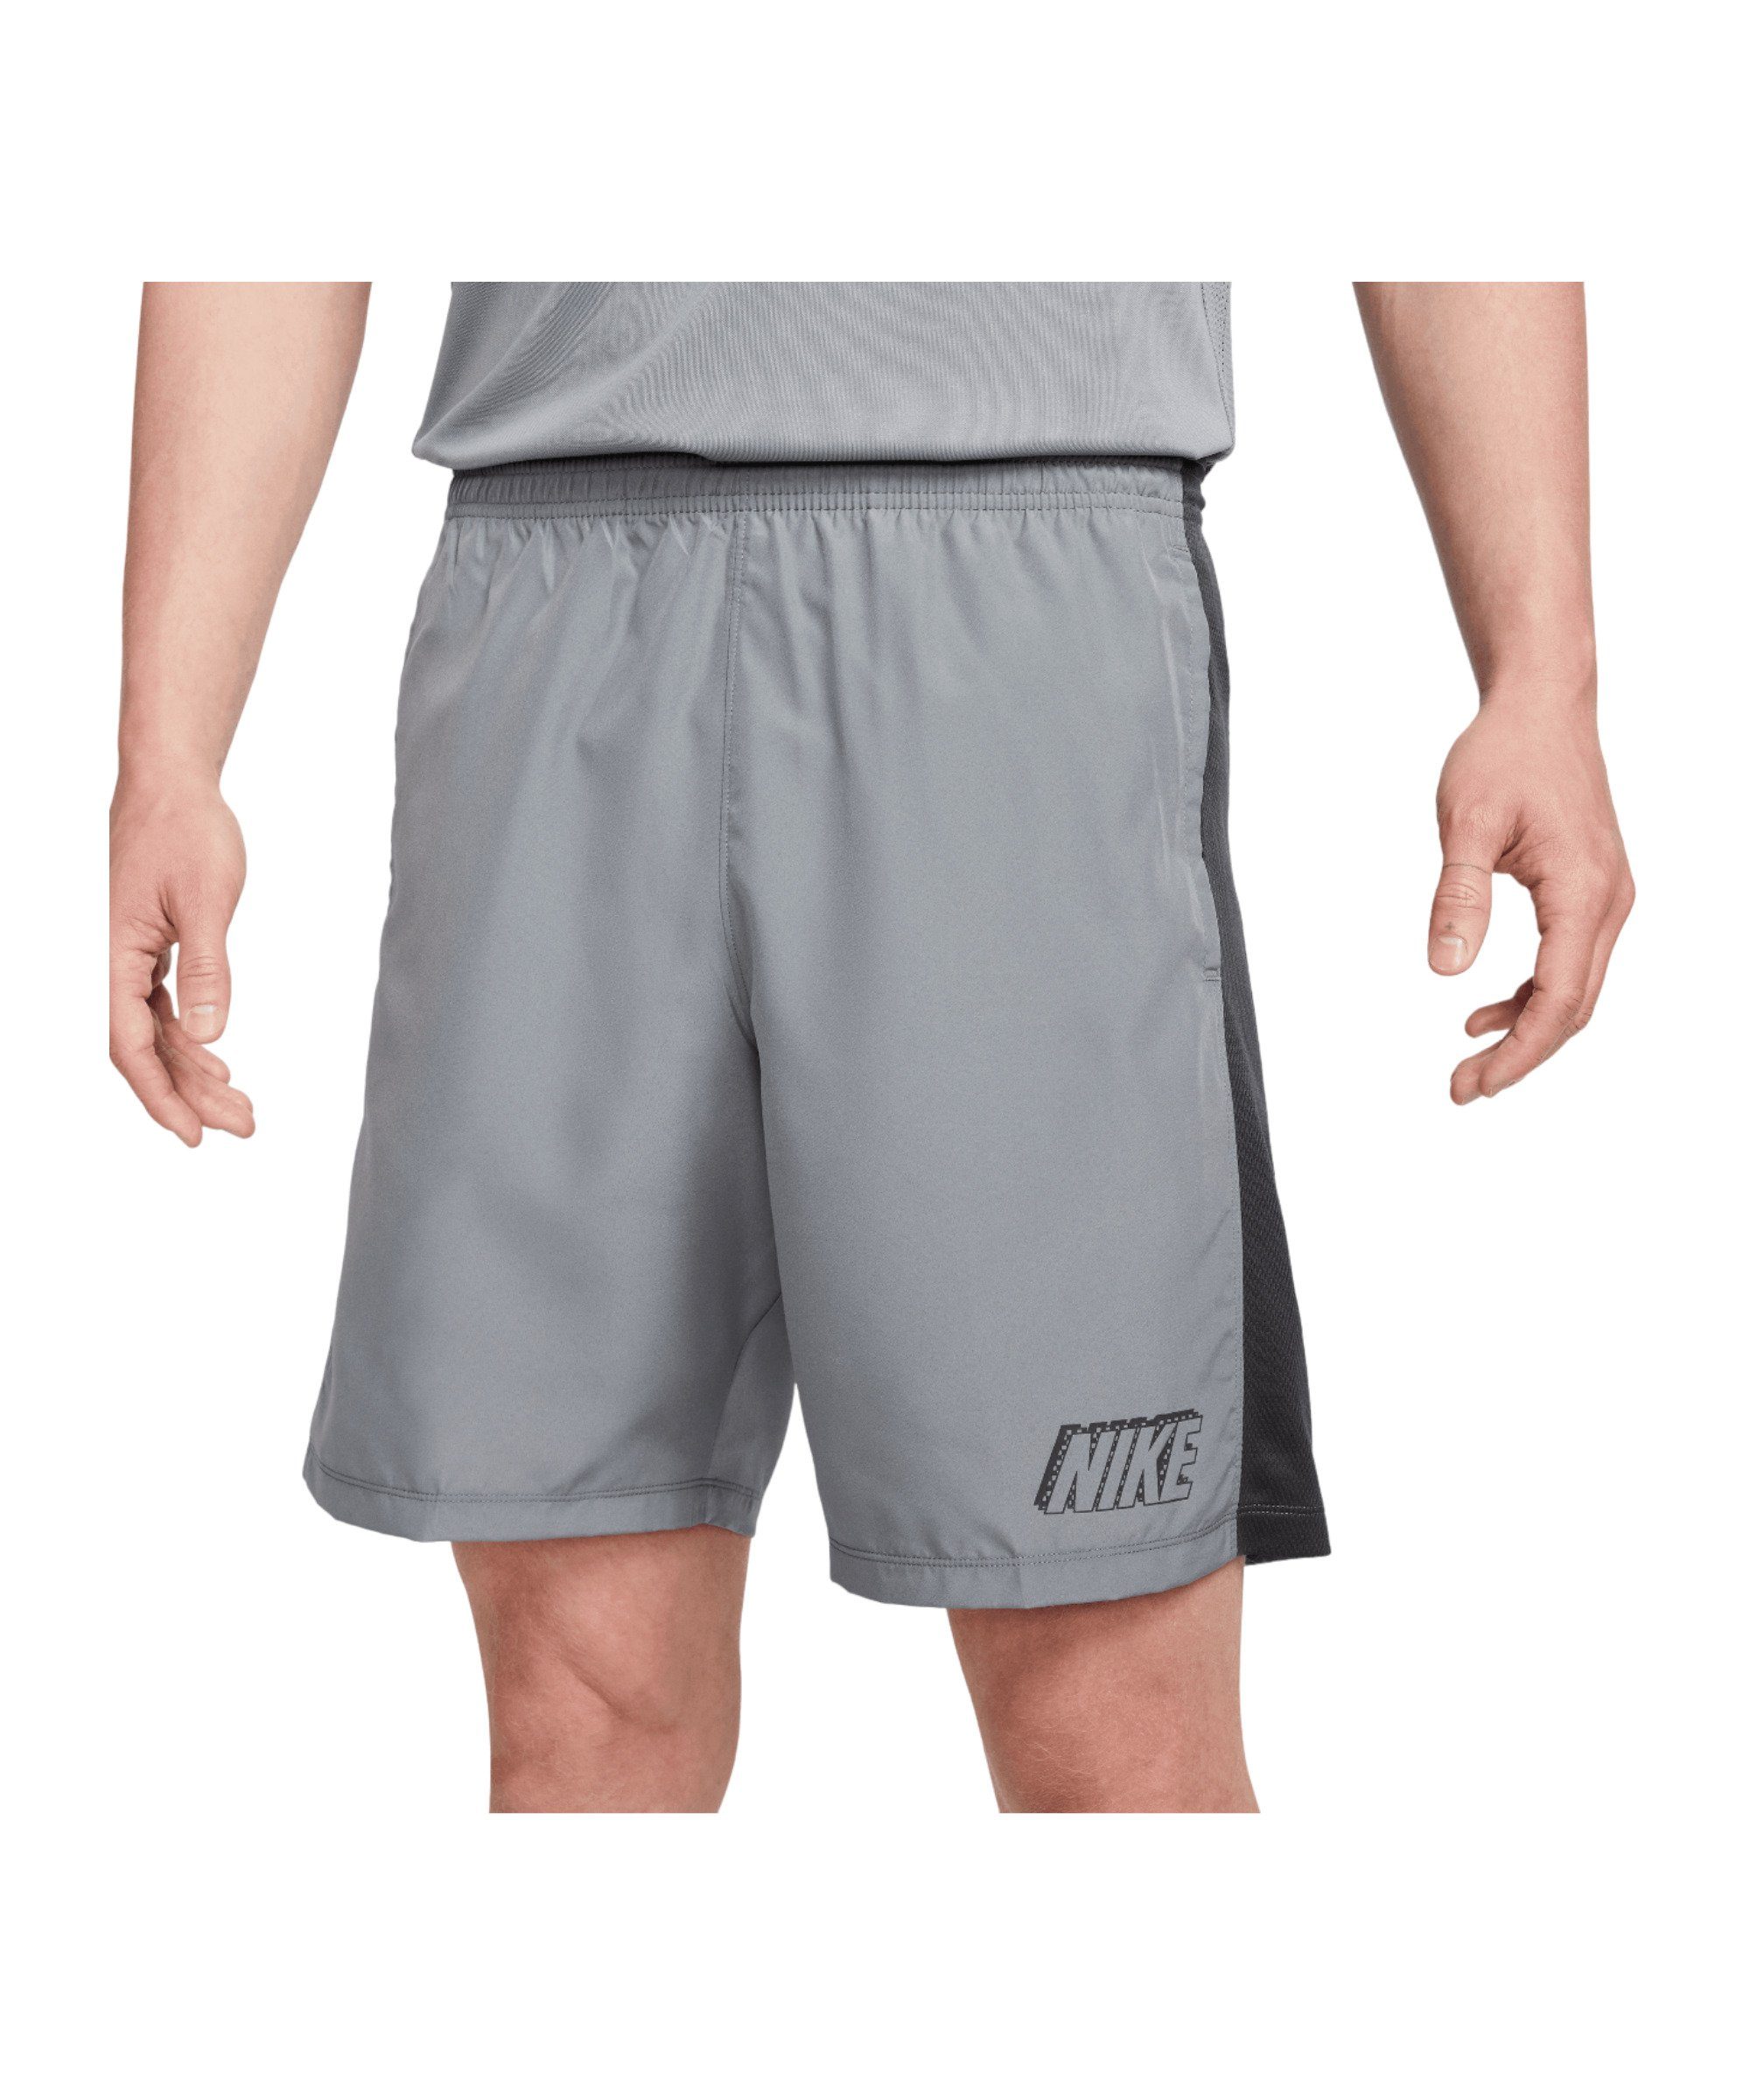 Academy Nike Sporthose Short graugraugrau